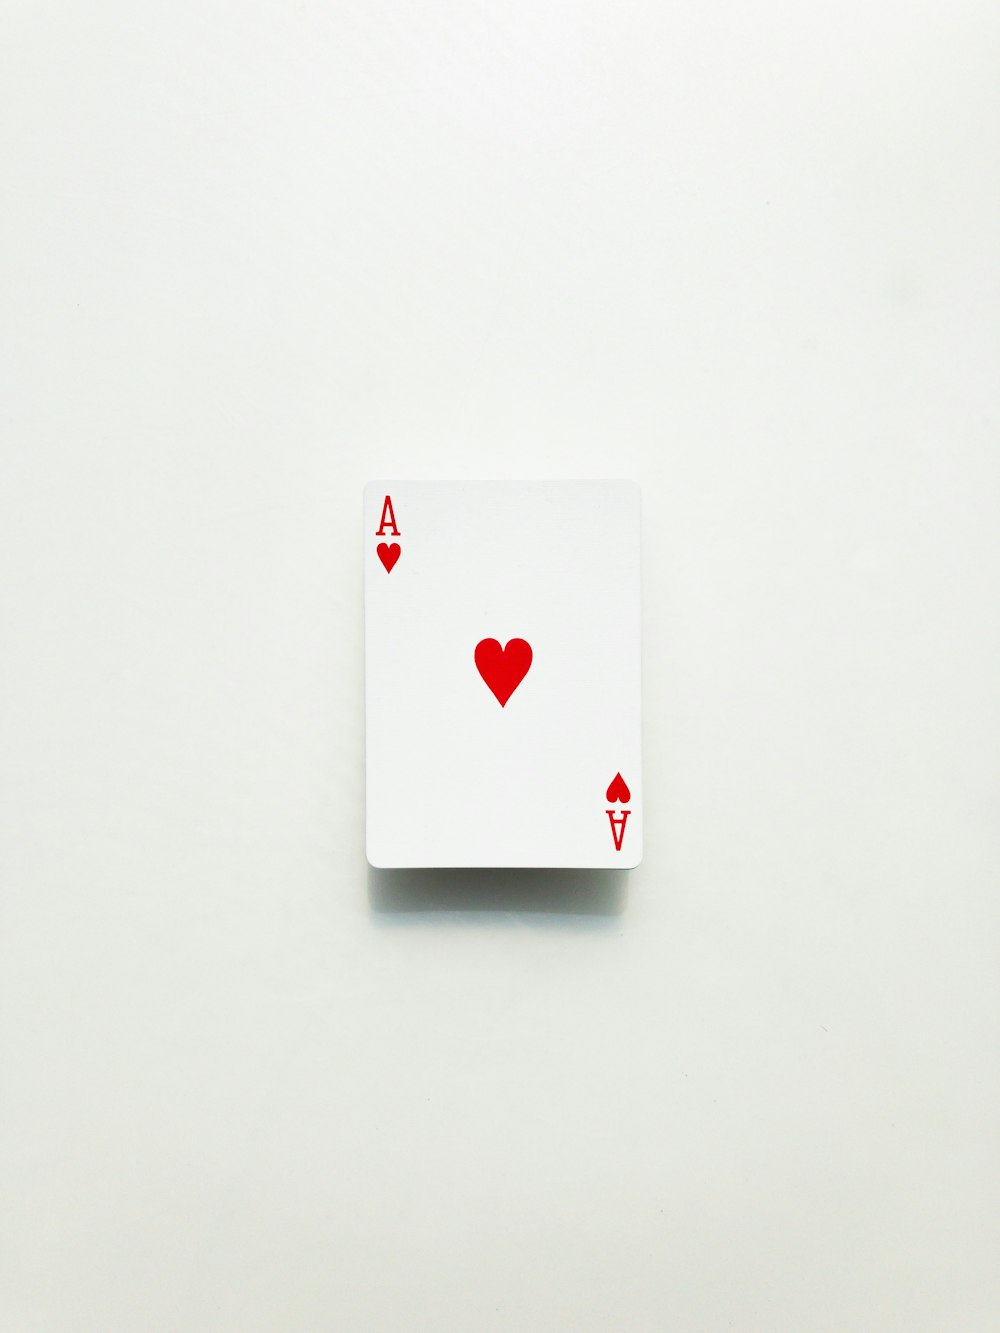 2 of diamonds playing card